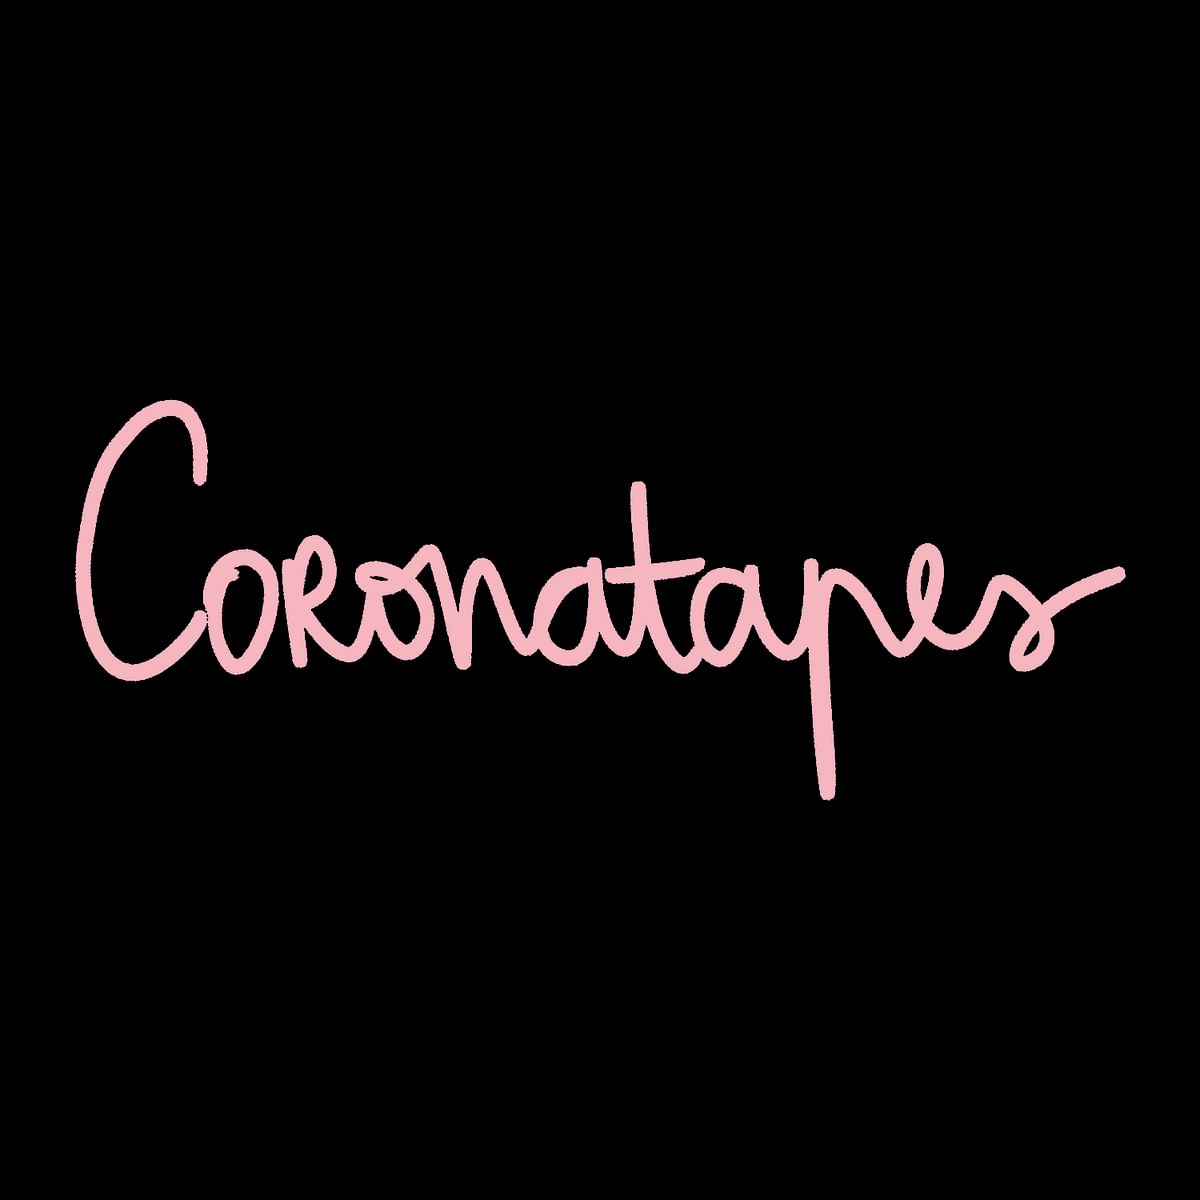 Coronatapes